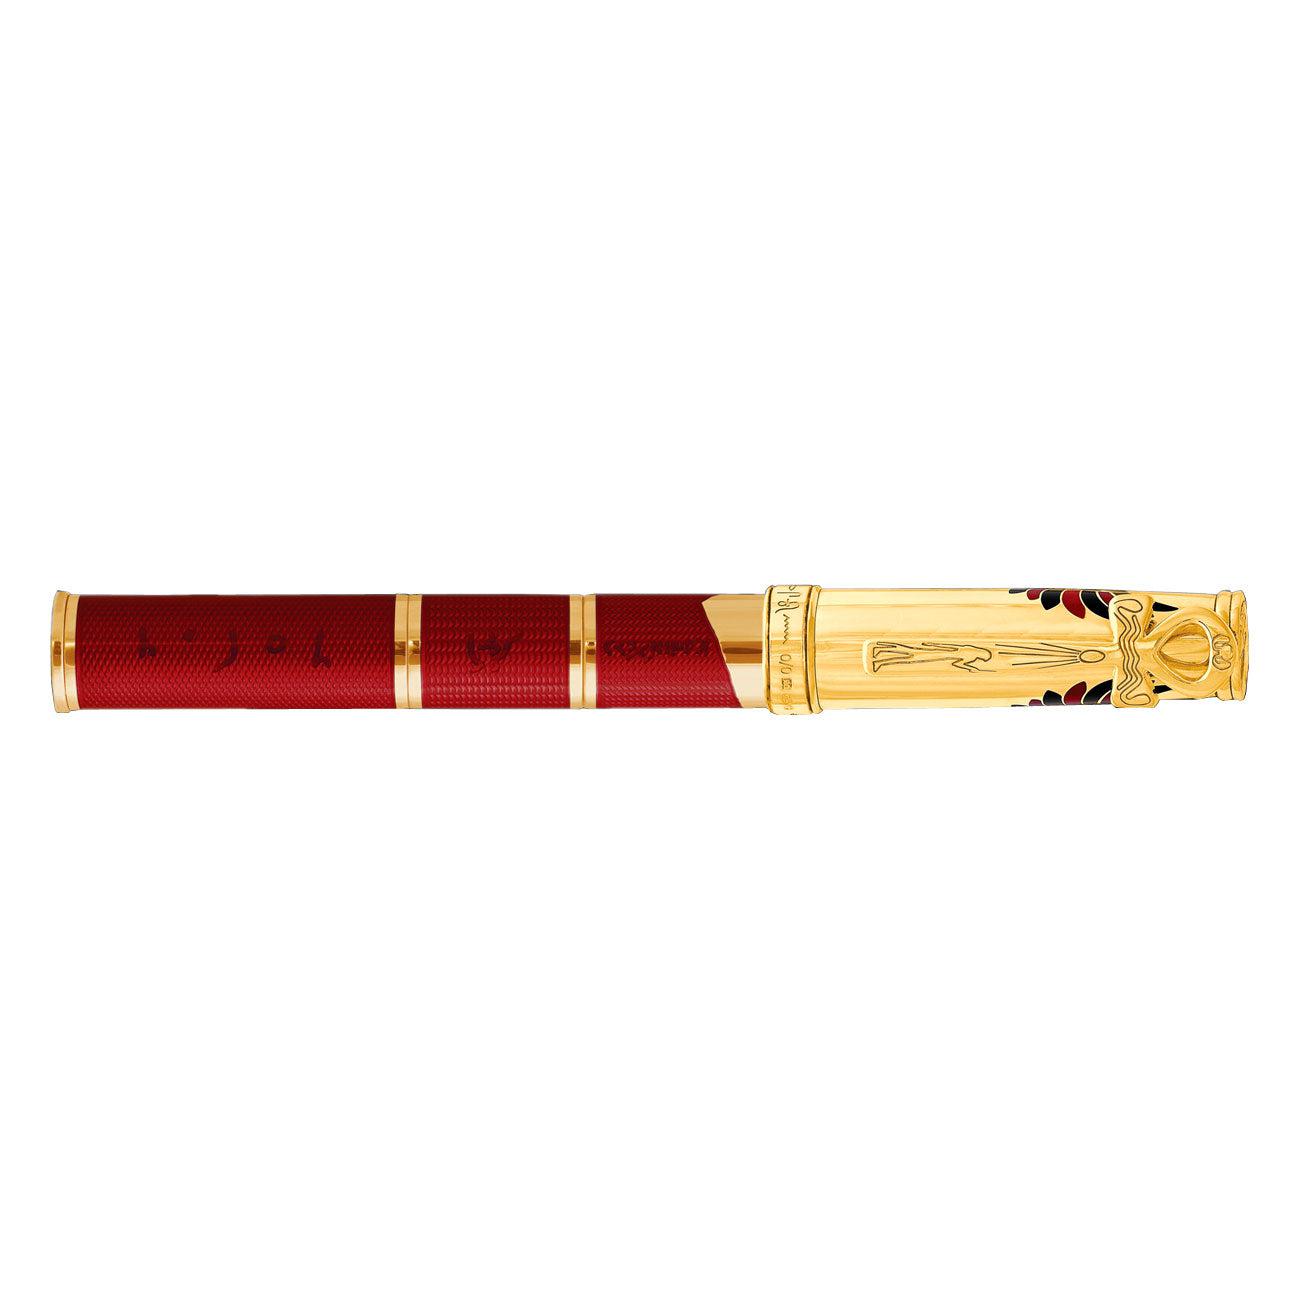 David Oscarson Rosetta Stone Fountain Pen - Translucent Red and Opaque Black Hard Enamel w/ Gold vermeil-Pen Boutique Ltd